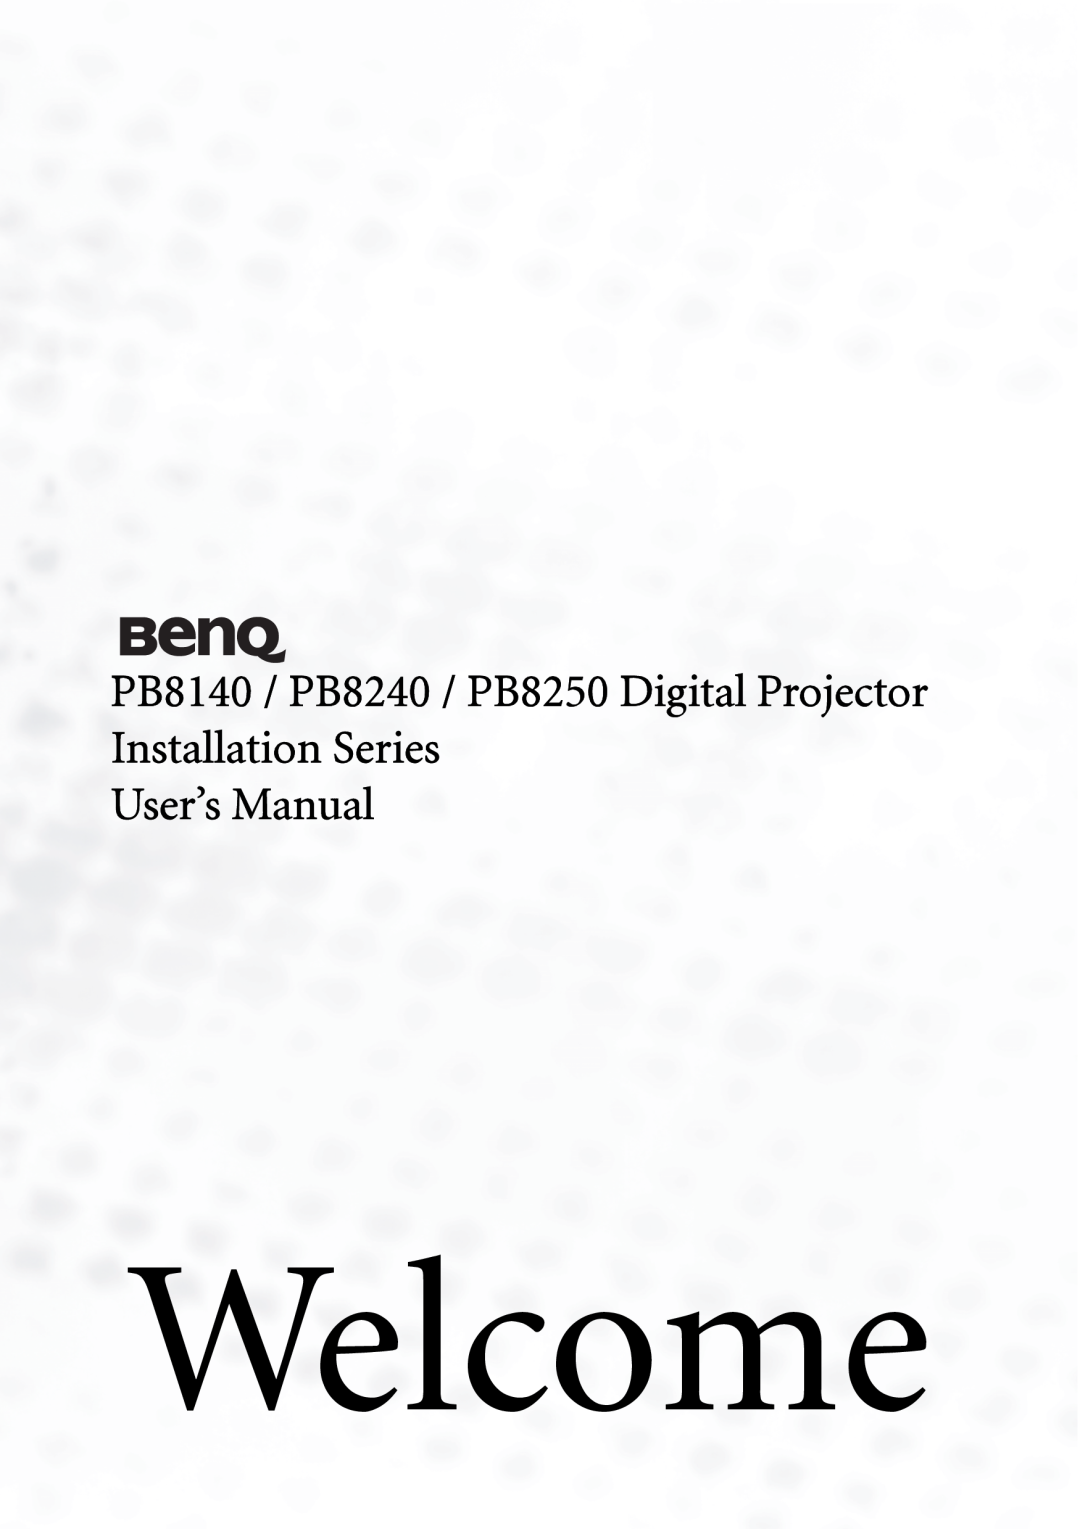 BenQ user manual Welcome, PB8140 / PB8240 / PB8250 Digital Projector Installation Series, User’s Manual 